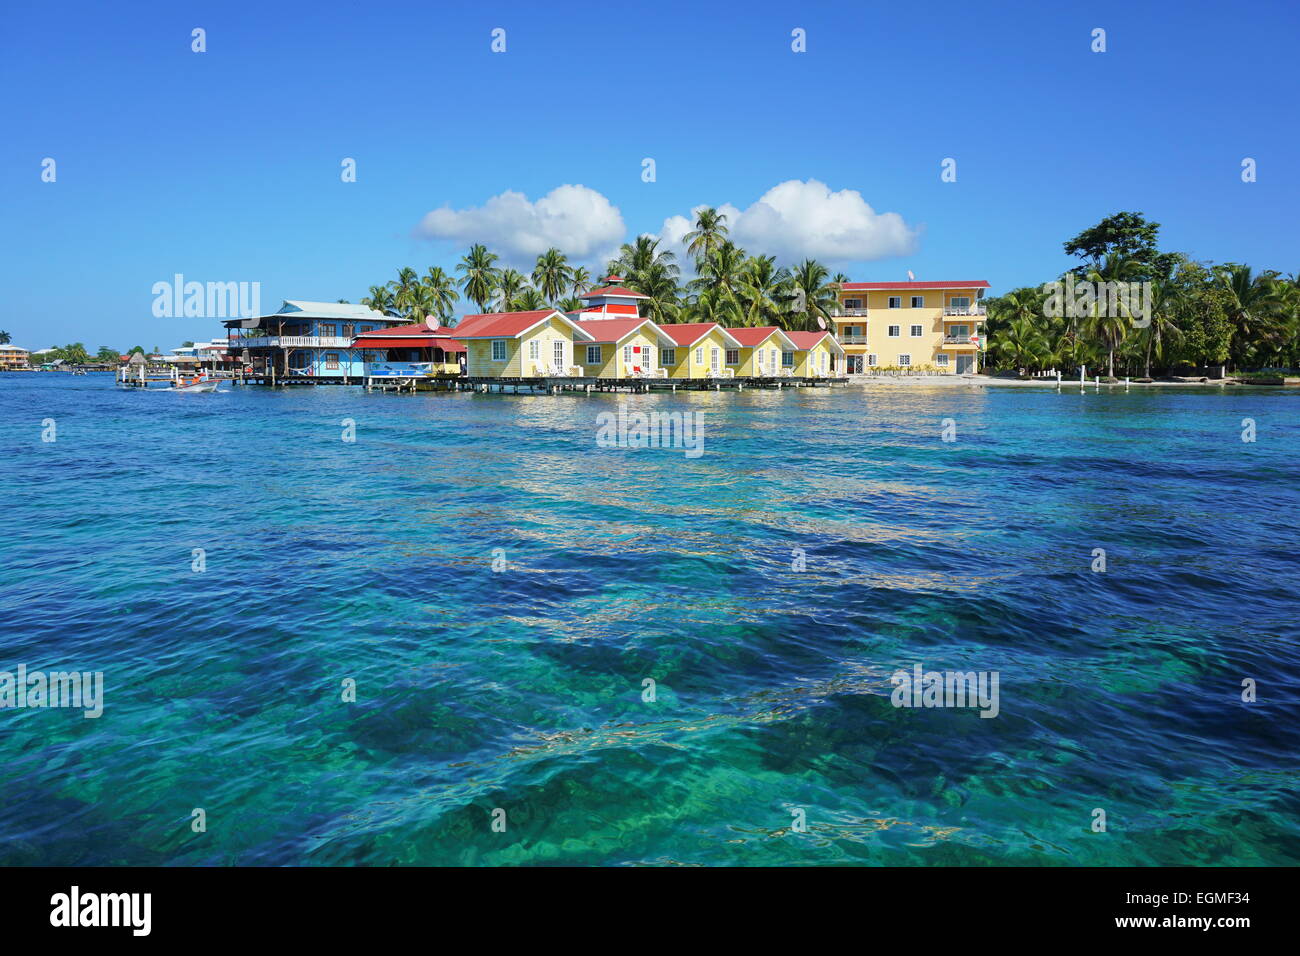 Island resort with cabins overwater, Caribbean, Bocas del toro, Carenero, Panama Stock Photo